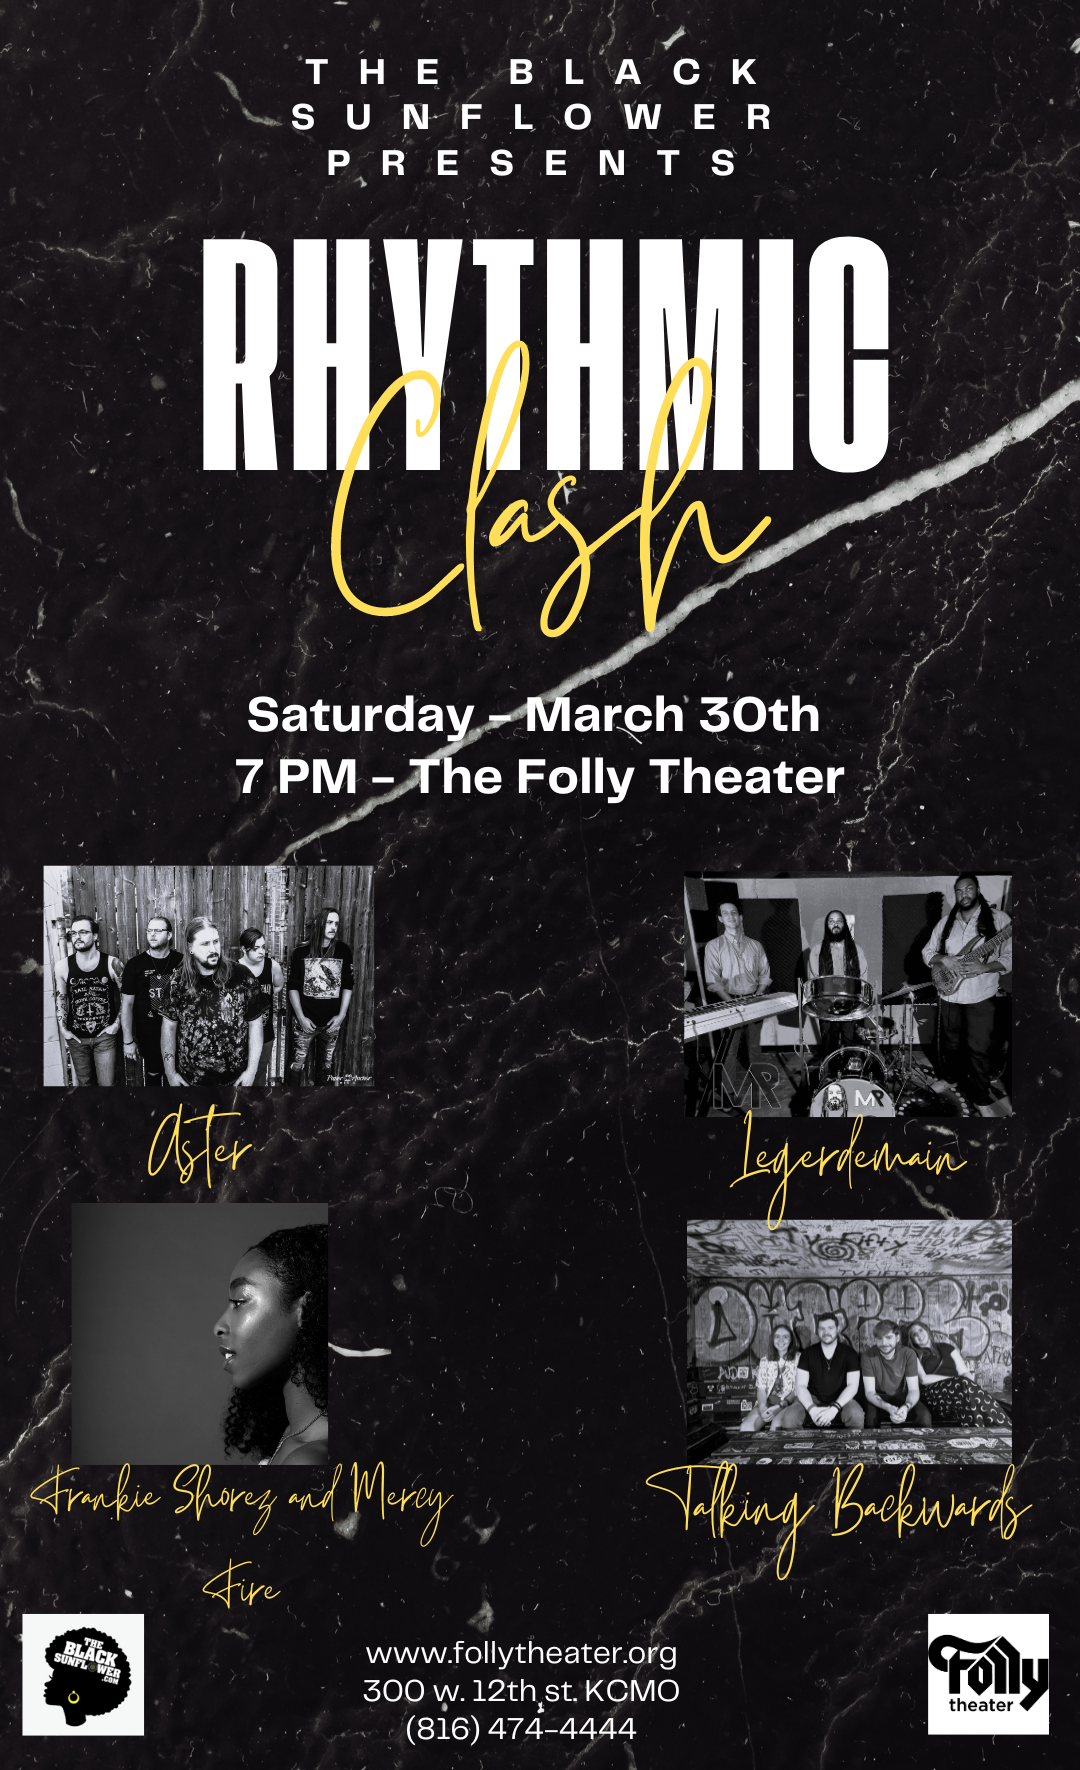 Rhythmic Clash Pre-sale tickets now available!